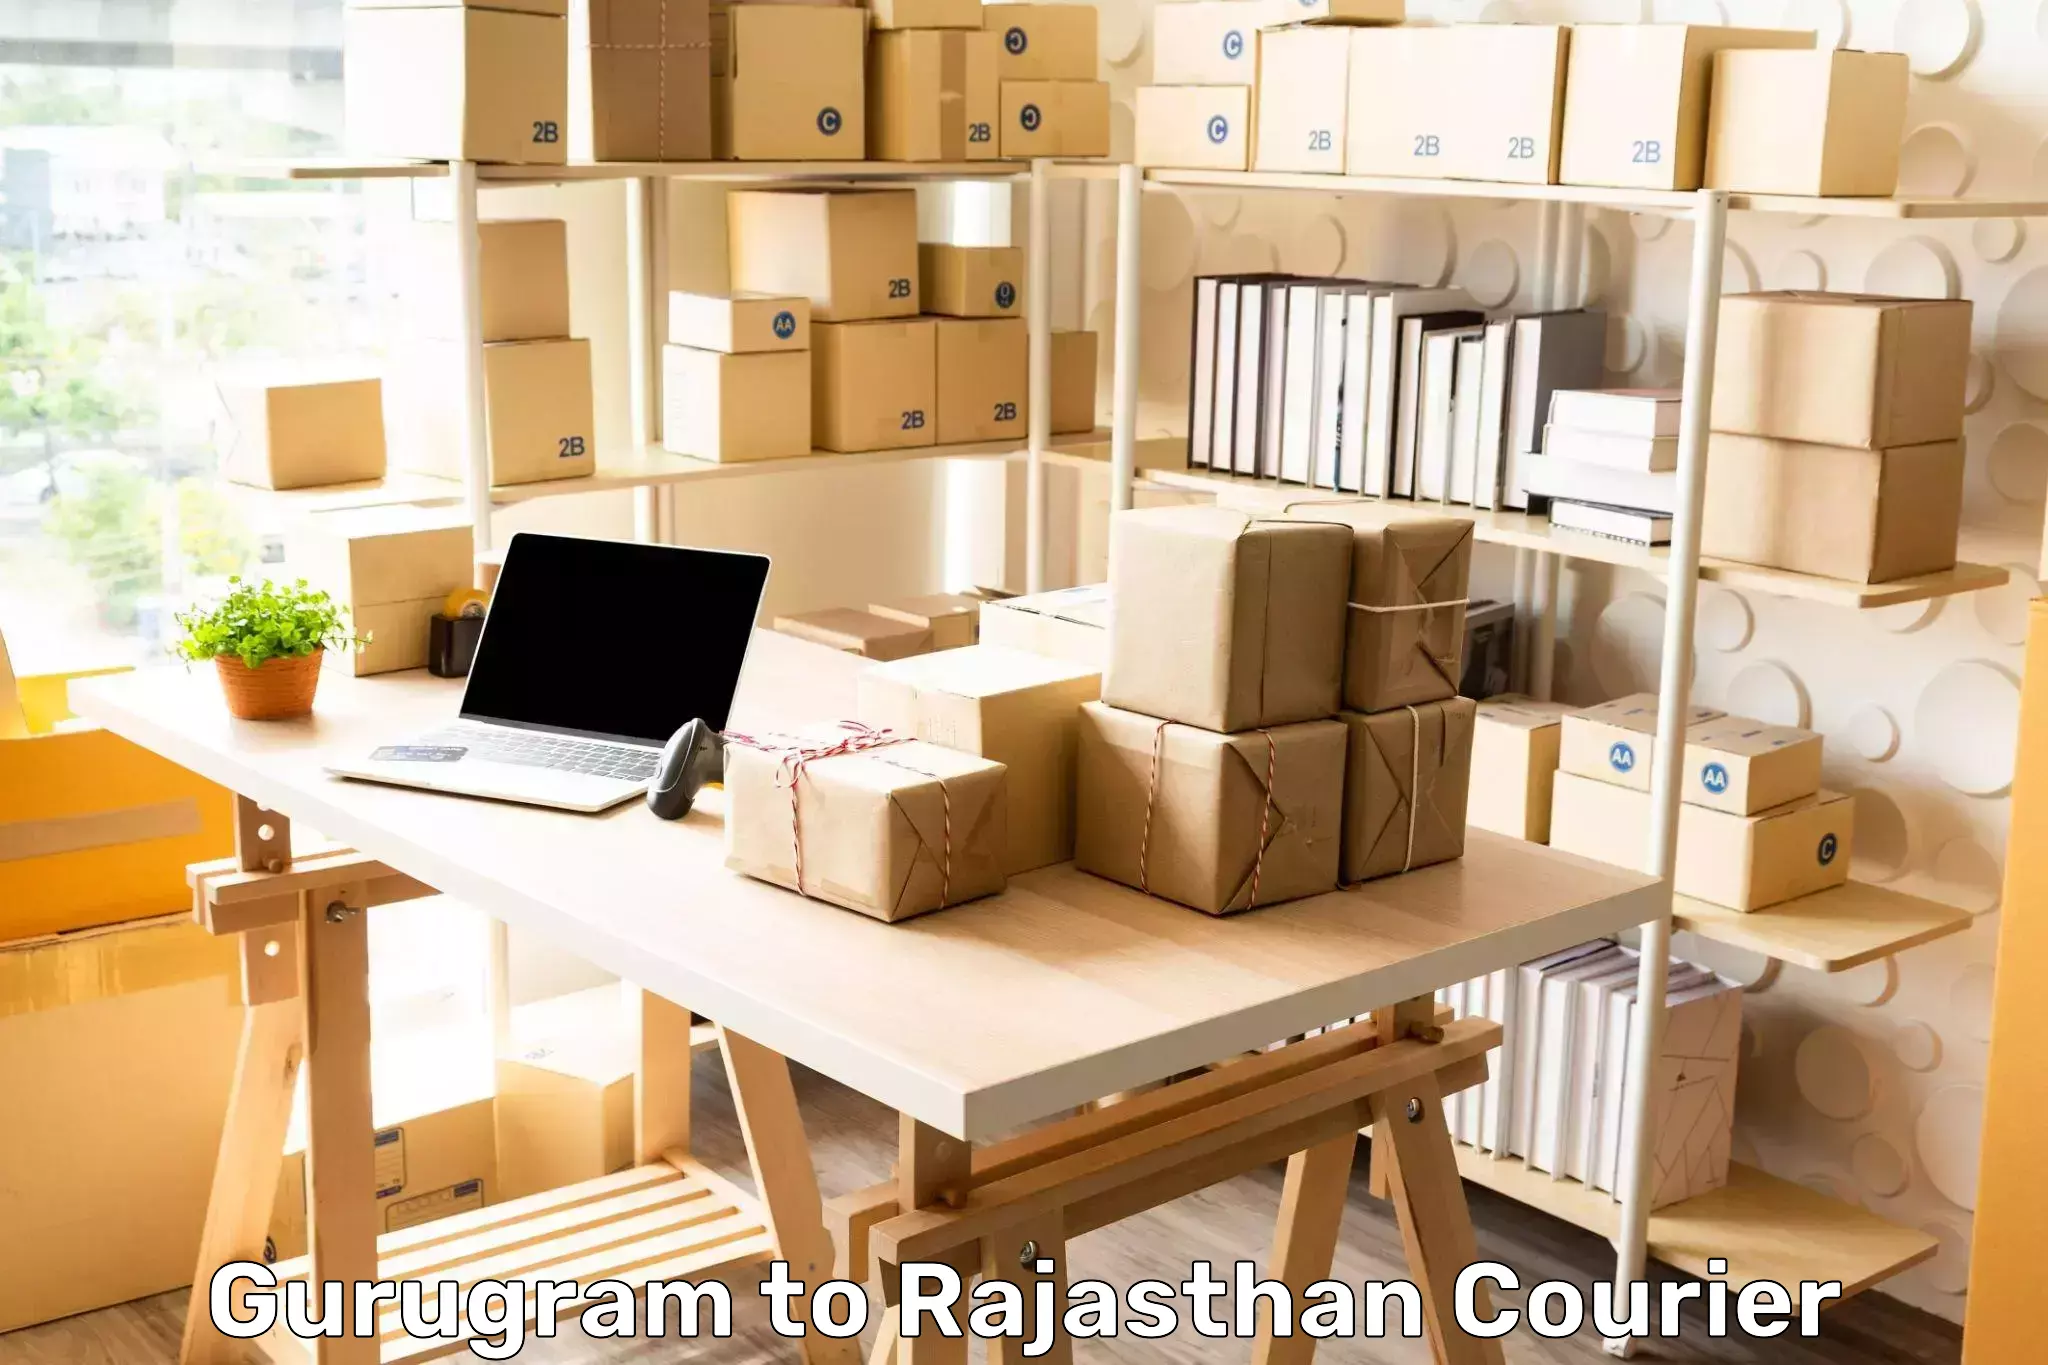 User-friendly courier app Gurugram to Rajasthan